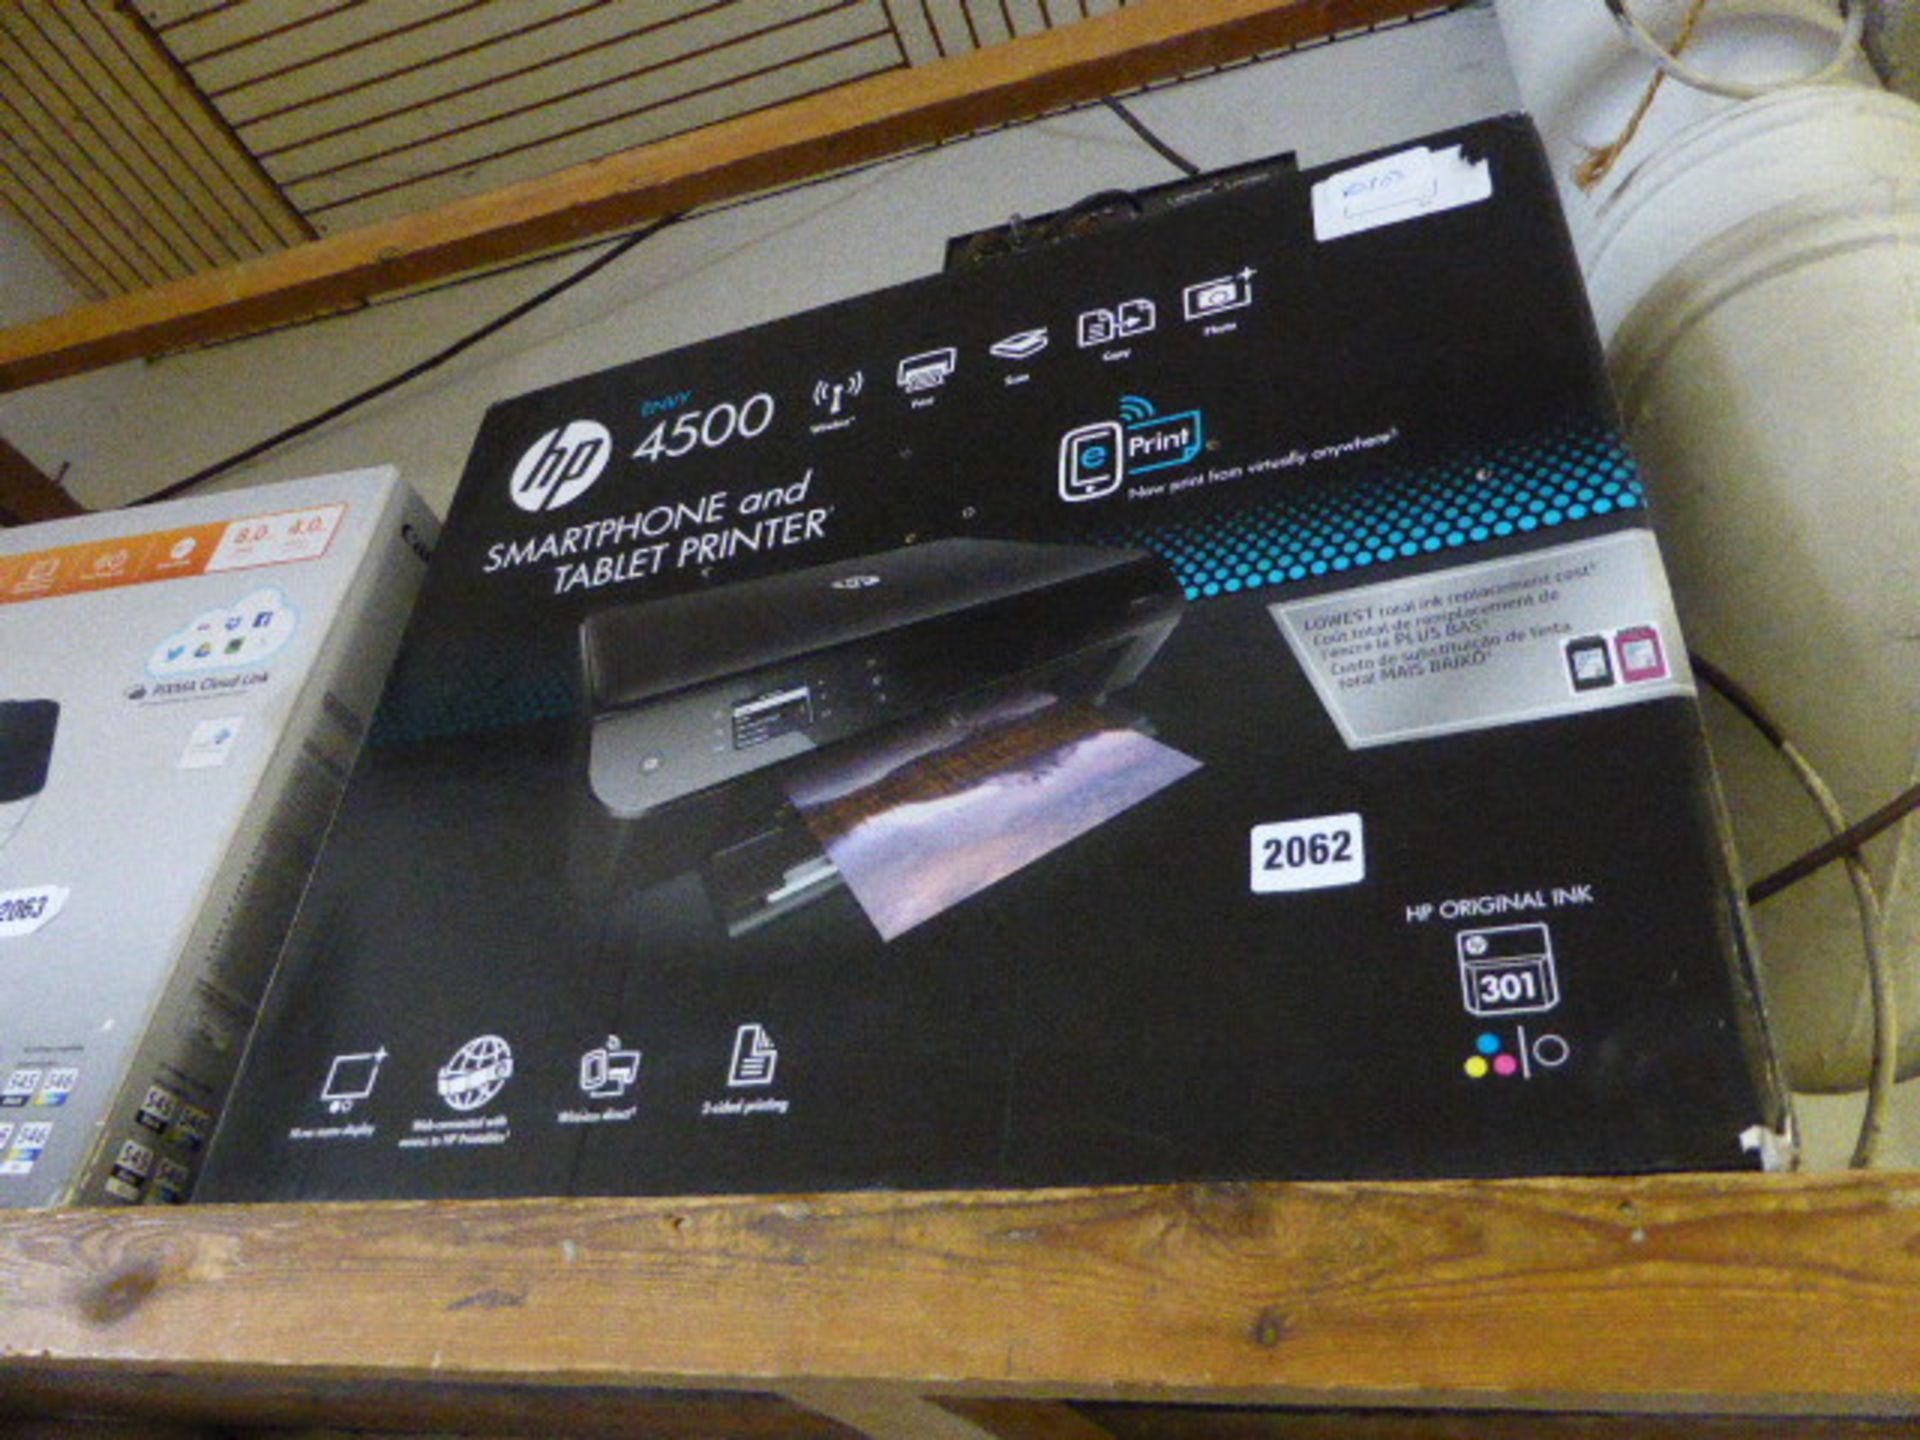 HP envy 4500 wireless all in one printer in box